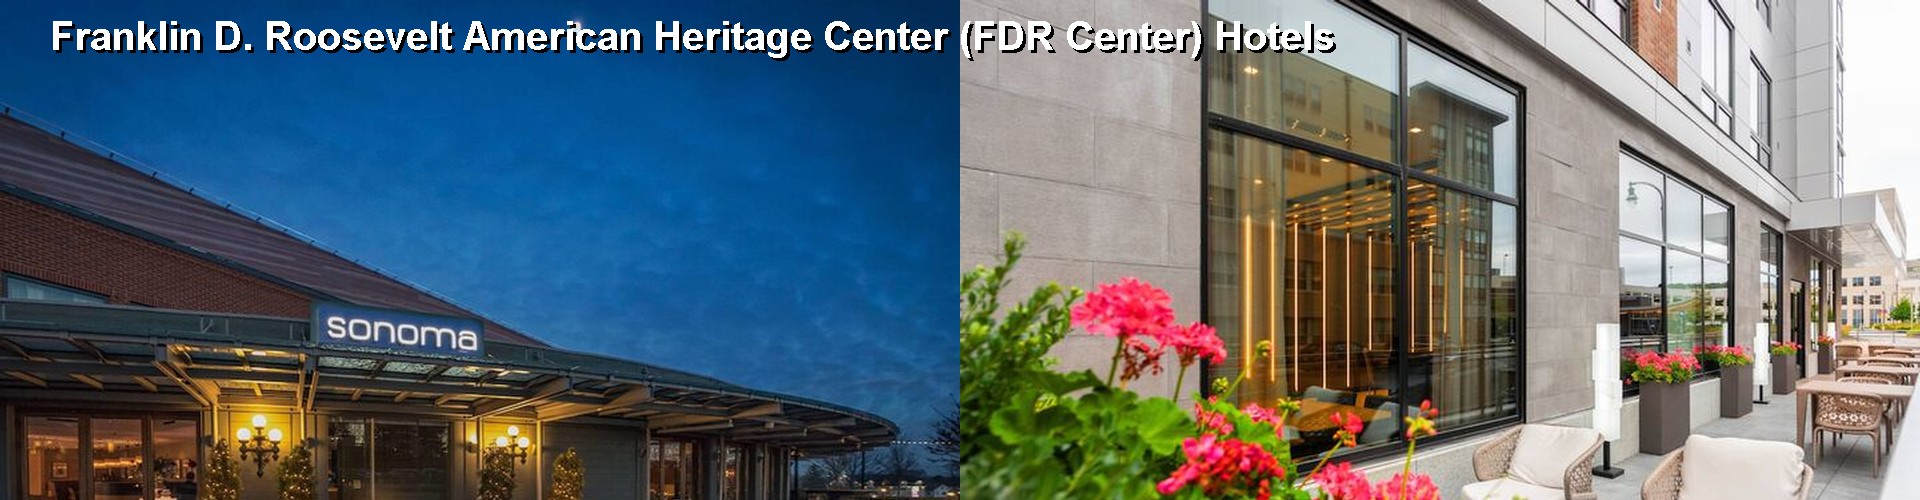 5 Best Hotels near Franklin D. Roosevelt American Heritage Center (FDR Center)